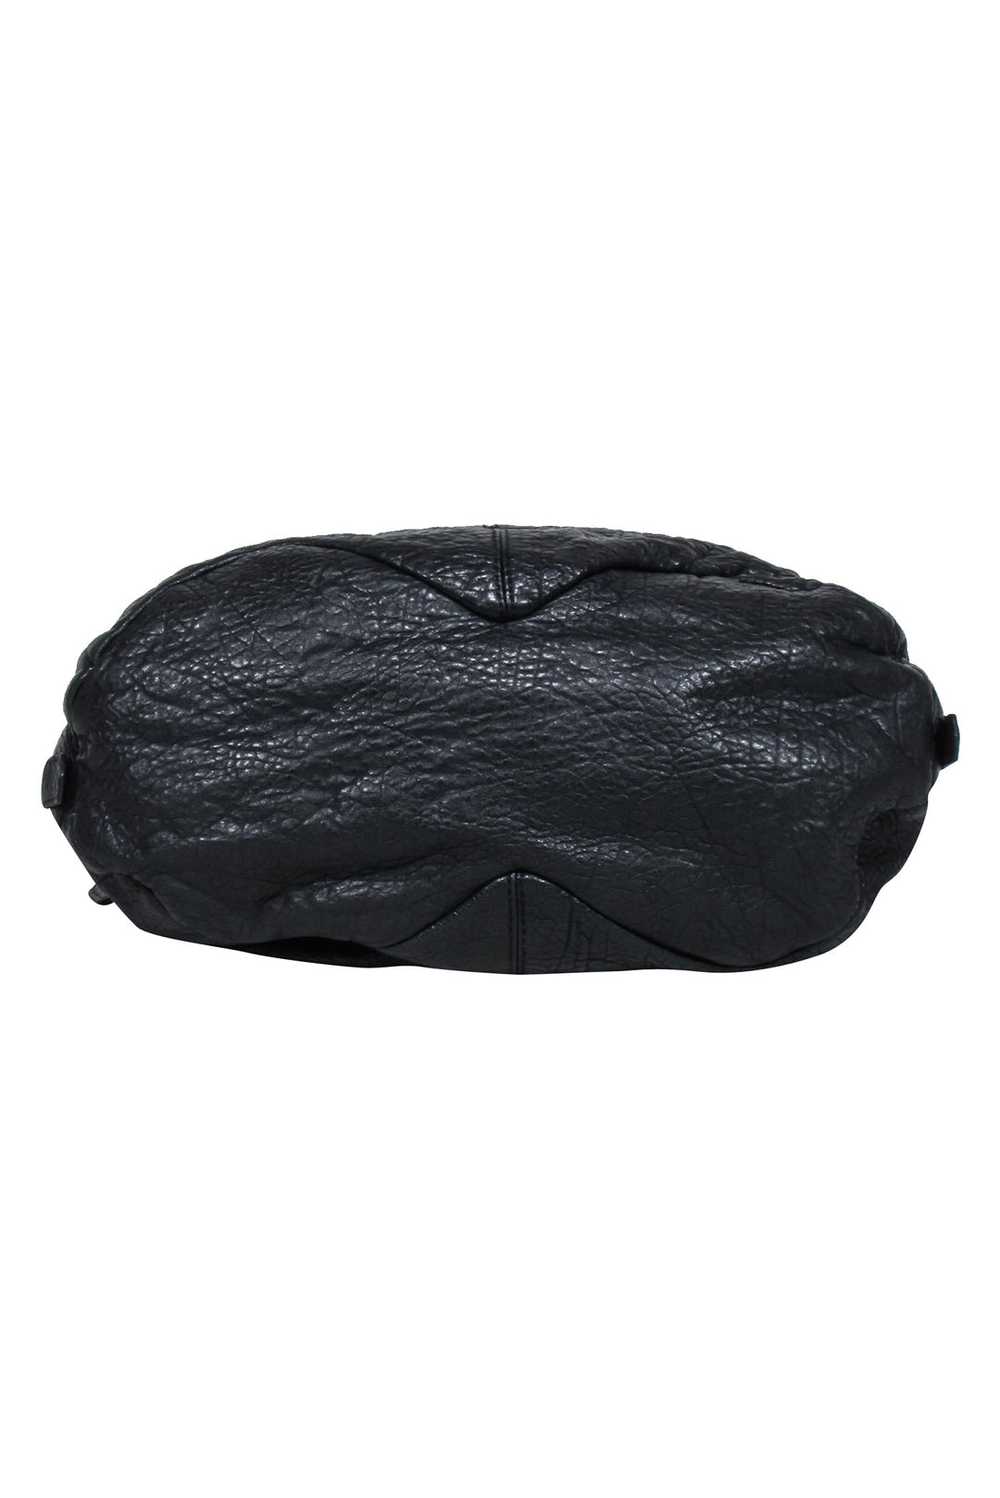 Givenchy - Black Leather Hobo Bag - image 4